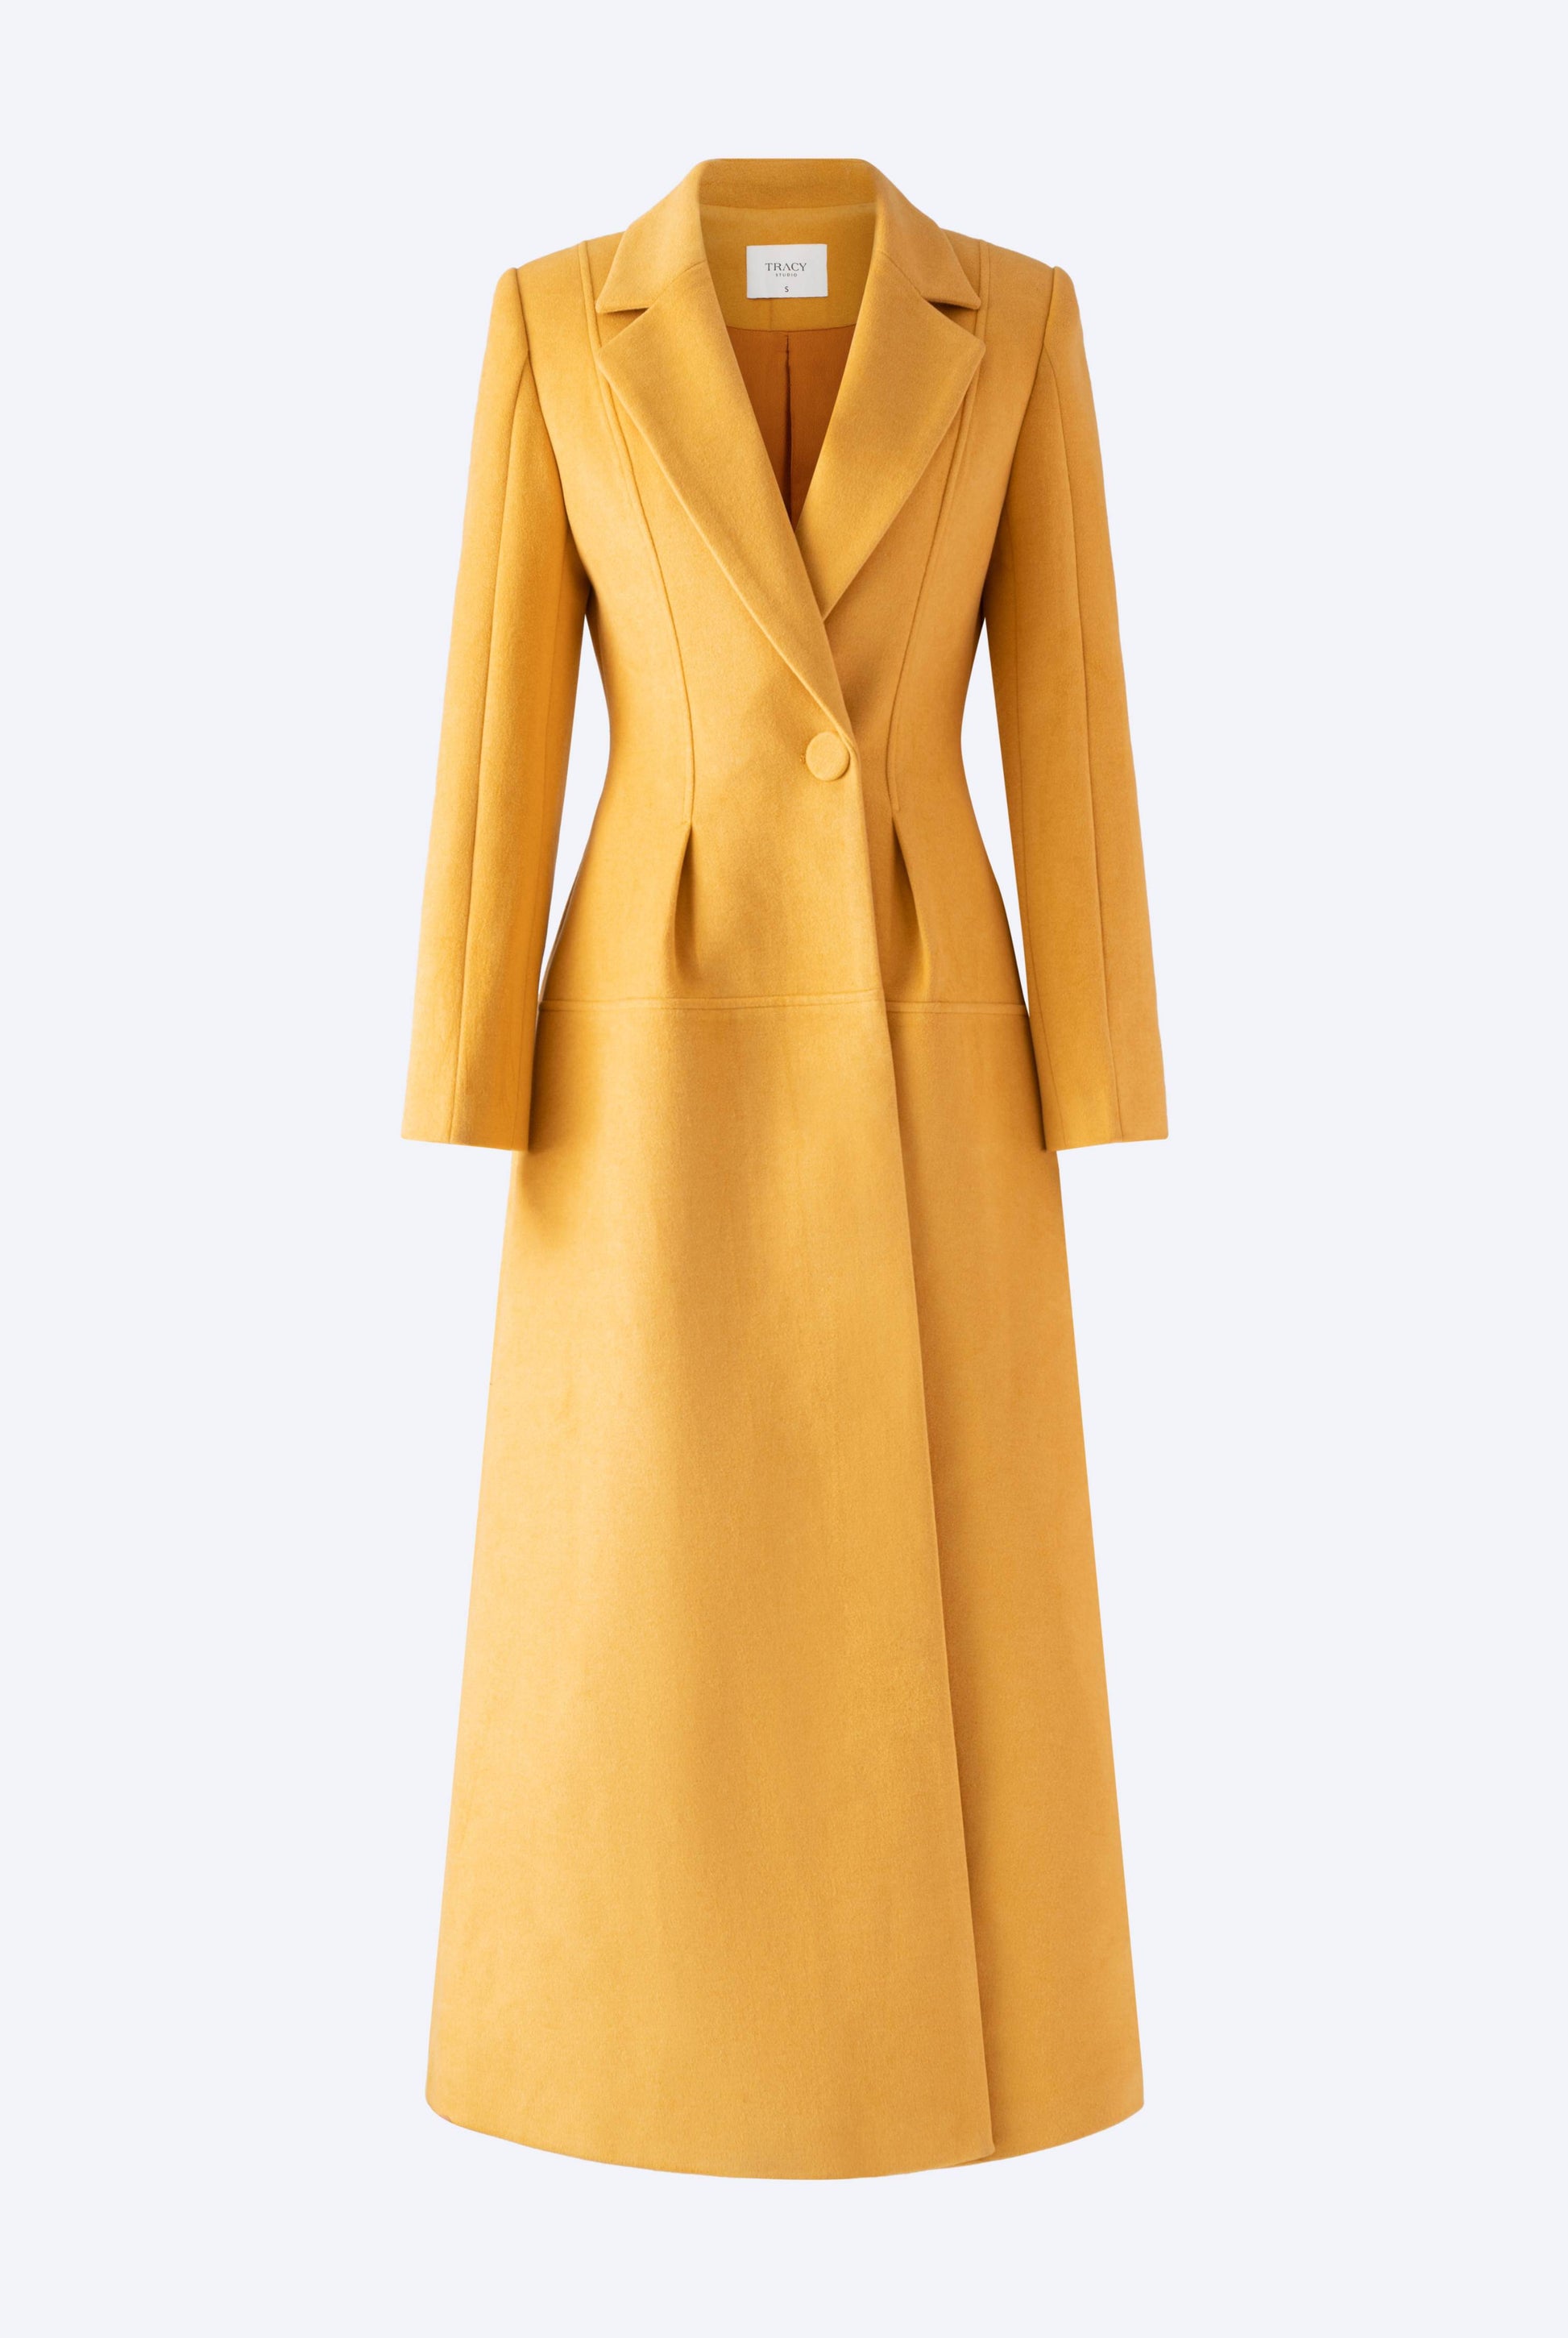 Prada Women's Single-Breasted Double Wool Coat